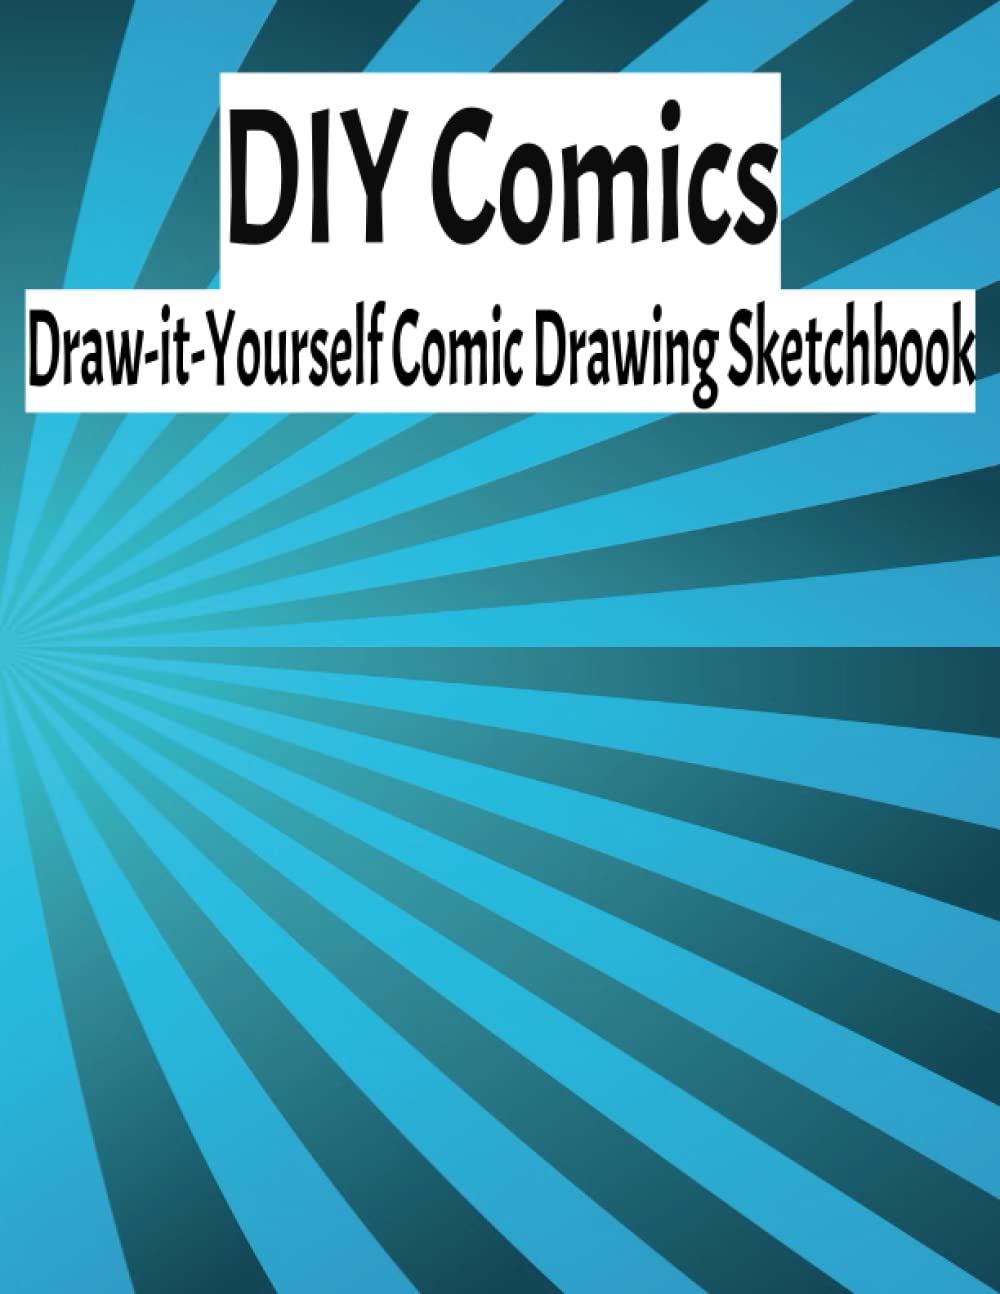 DIY Comics: Draw-It-Yourself Comic Sketchbook